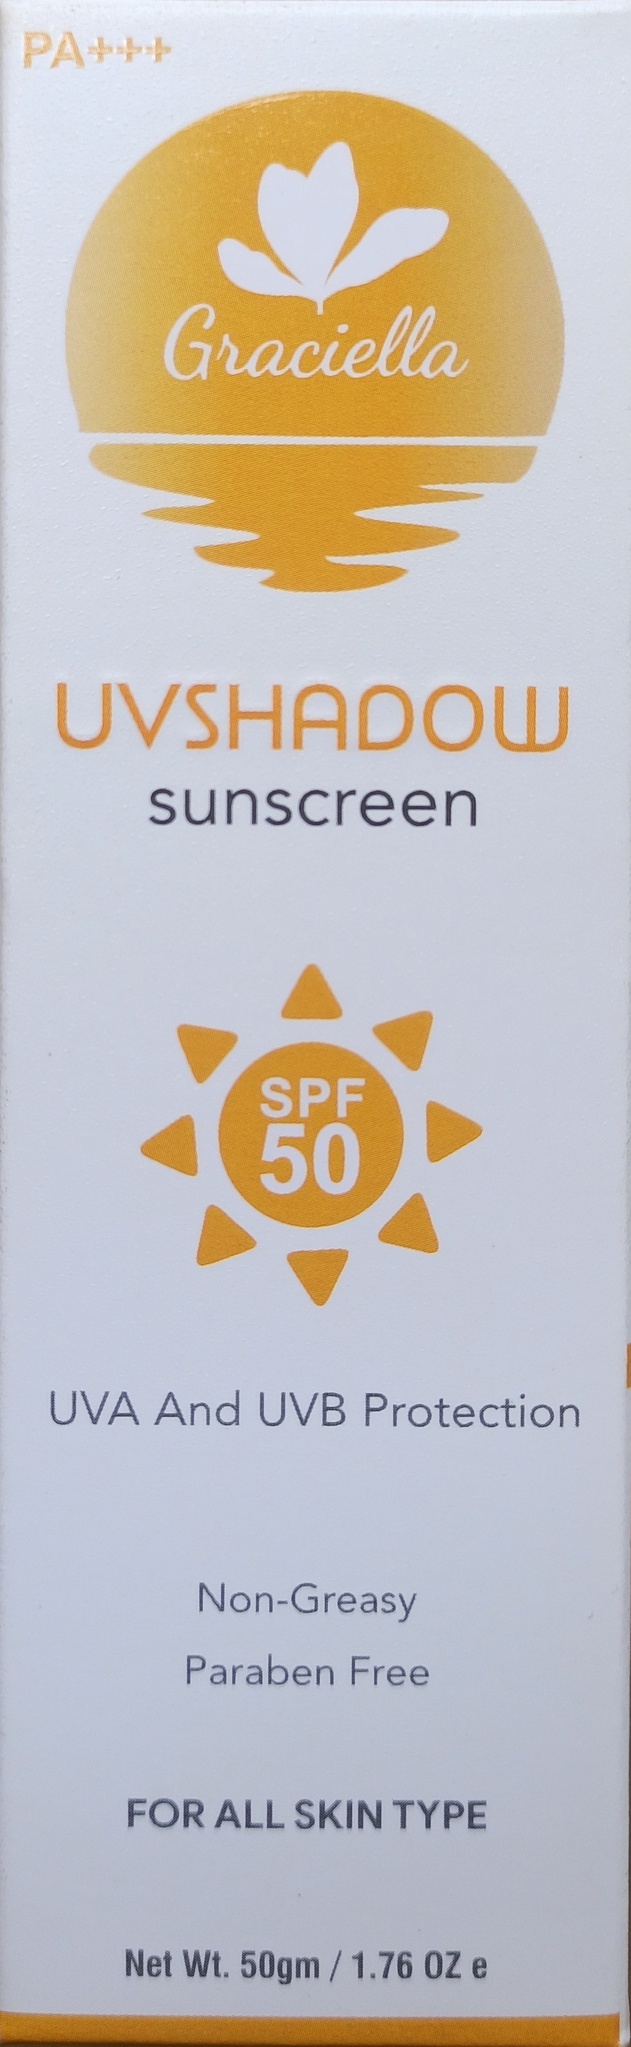 Graciella Uvshadow Sunscreen